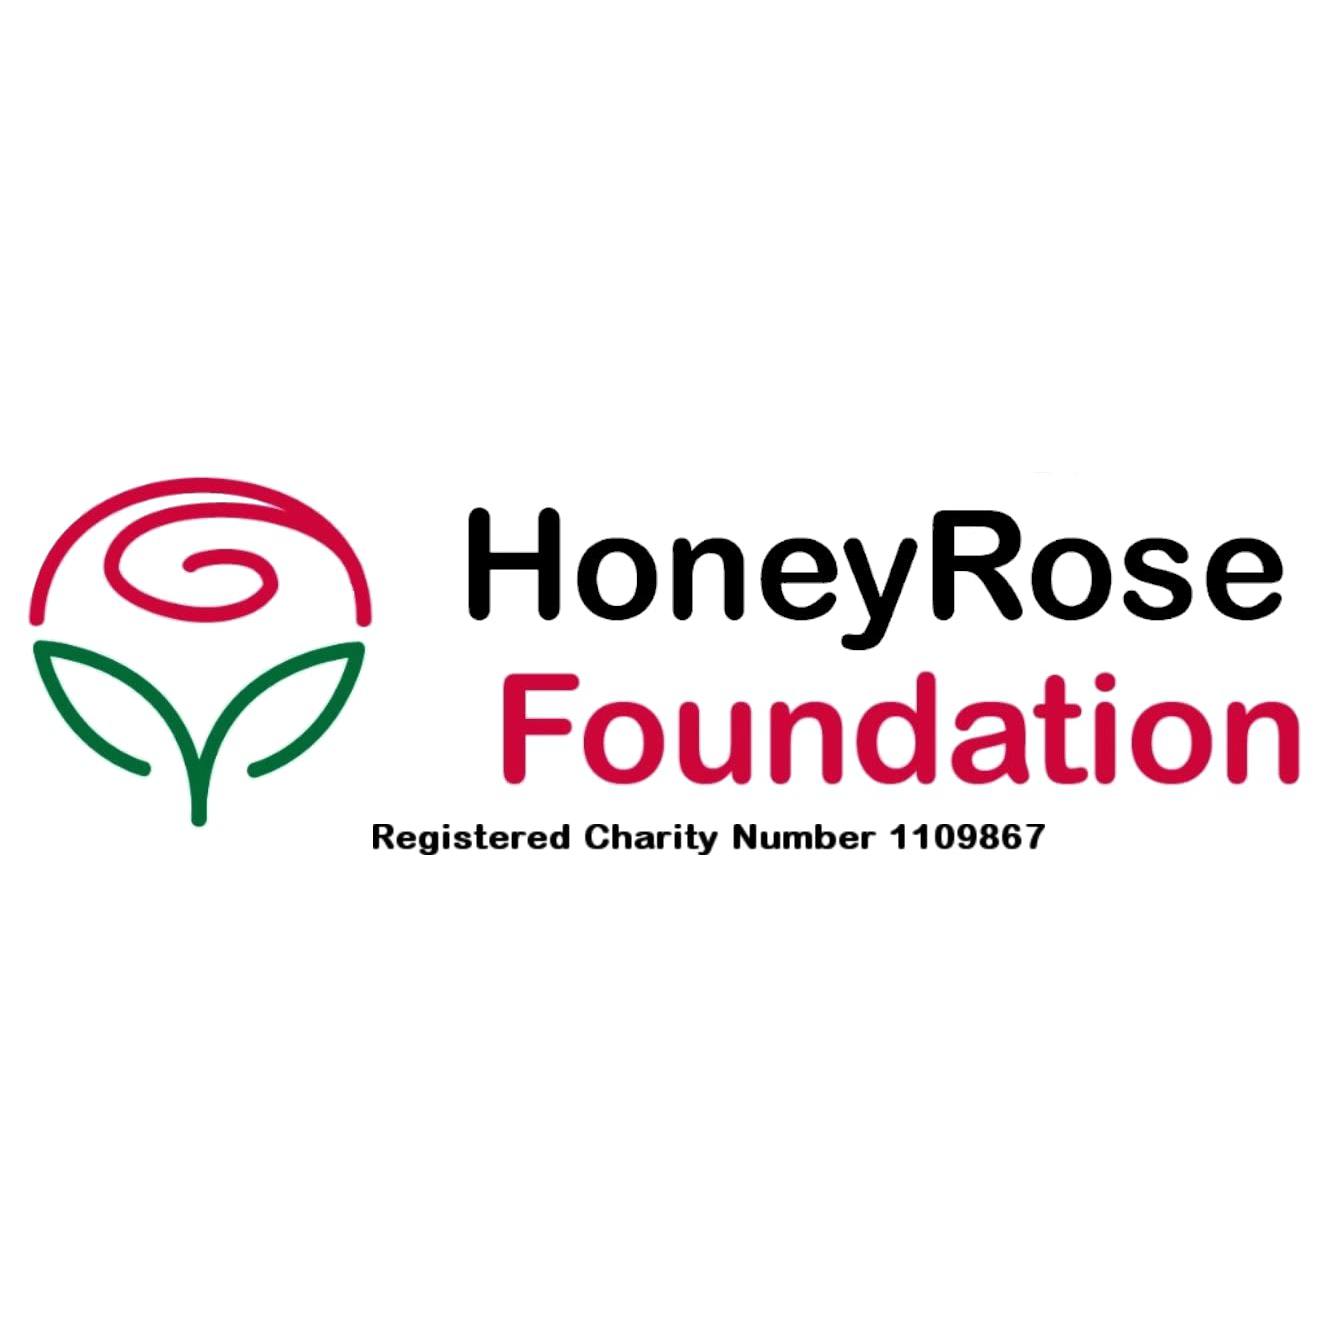 LOGO HoneyRose Foundation St. Helens 01744 451919